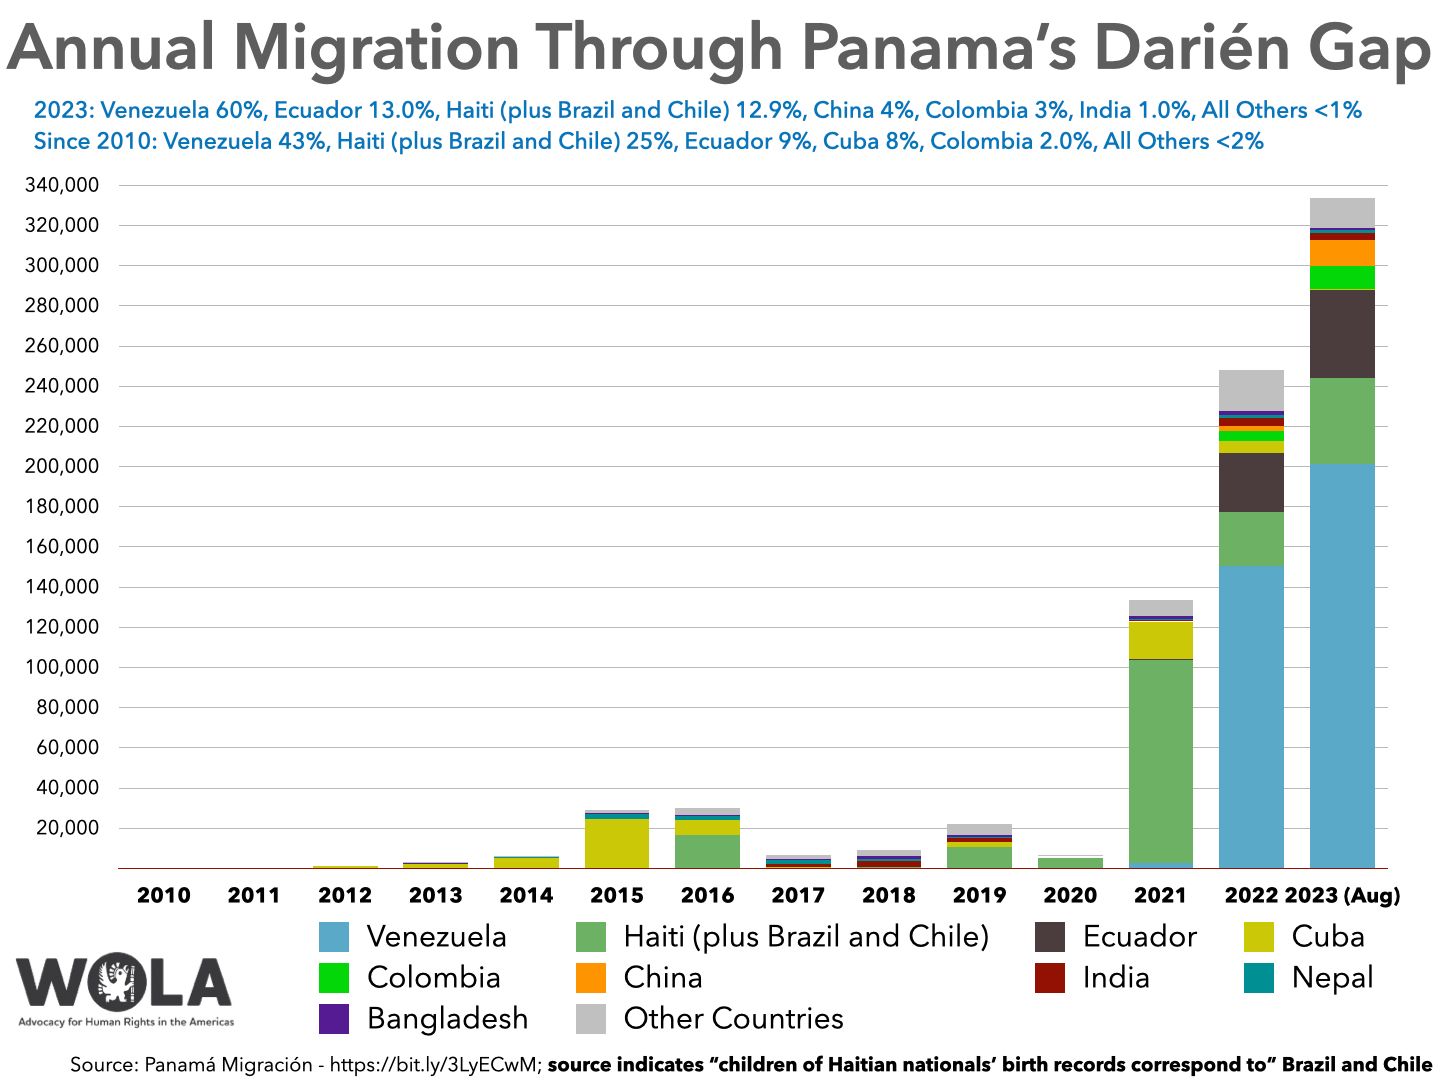 Annual Migration Through Panama’s Darién Gap  2023: Venezuela 60%, Ecuador 13.0%, Haiti (plus Brazil and Chile) 12.9%, China 4%, Colombia 3%, India 1.0%, All Others <1%  Since 2010: Venezuela 43%, Haiti (plus Brazil and Chile) 25%, Ecuador 9%, Cuba 8%, Colombia 2.0%, All Others <2%  	2010	2011	2012	2013	2014	2015	2016	2017	2018	2019	2020	2021	2022	2023 (Aug) Venezuela						2	6	18	65	78	69	2819	150327	201288 Haiti (plus Brazil and Chile)	0	1	0	2	2	8	16742	40	420	10490	5331	101072	27287	42959 Ecuador		15	18	4	1	14	93	50	51	31	40	387	29356	43536 Cuba	79	18	1154	2010	5026	24623	7383	736	329	2691	245	18600	5961	700 Colombia		65	24	26	9	32	16	36	13	23	21	169	5064	11276 China	268	9	11	1		1		6			3	77	2005	12979 India	12	11	48		1	1	20	1127	2962	1920	39	592	4094	3338 Nepal	29	9	213	297	468	2426	1619	2138	868	254	56	523	1631	1659 Bangladesh	53	45	89	398	377	559	580	506	1525	911	123	1657	1884	1158 Other Countries	118	110	220	313	291	1623	3601	2119	2988	5704	538	7830	20675	14811